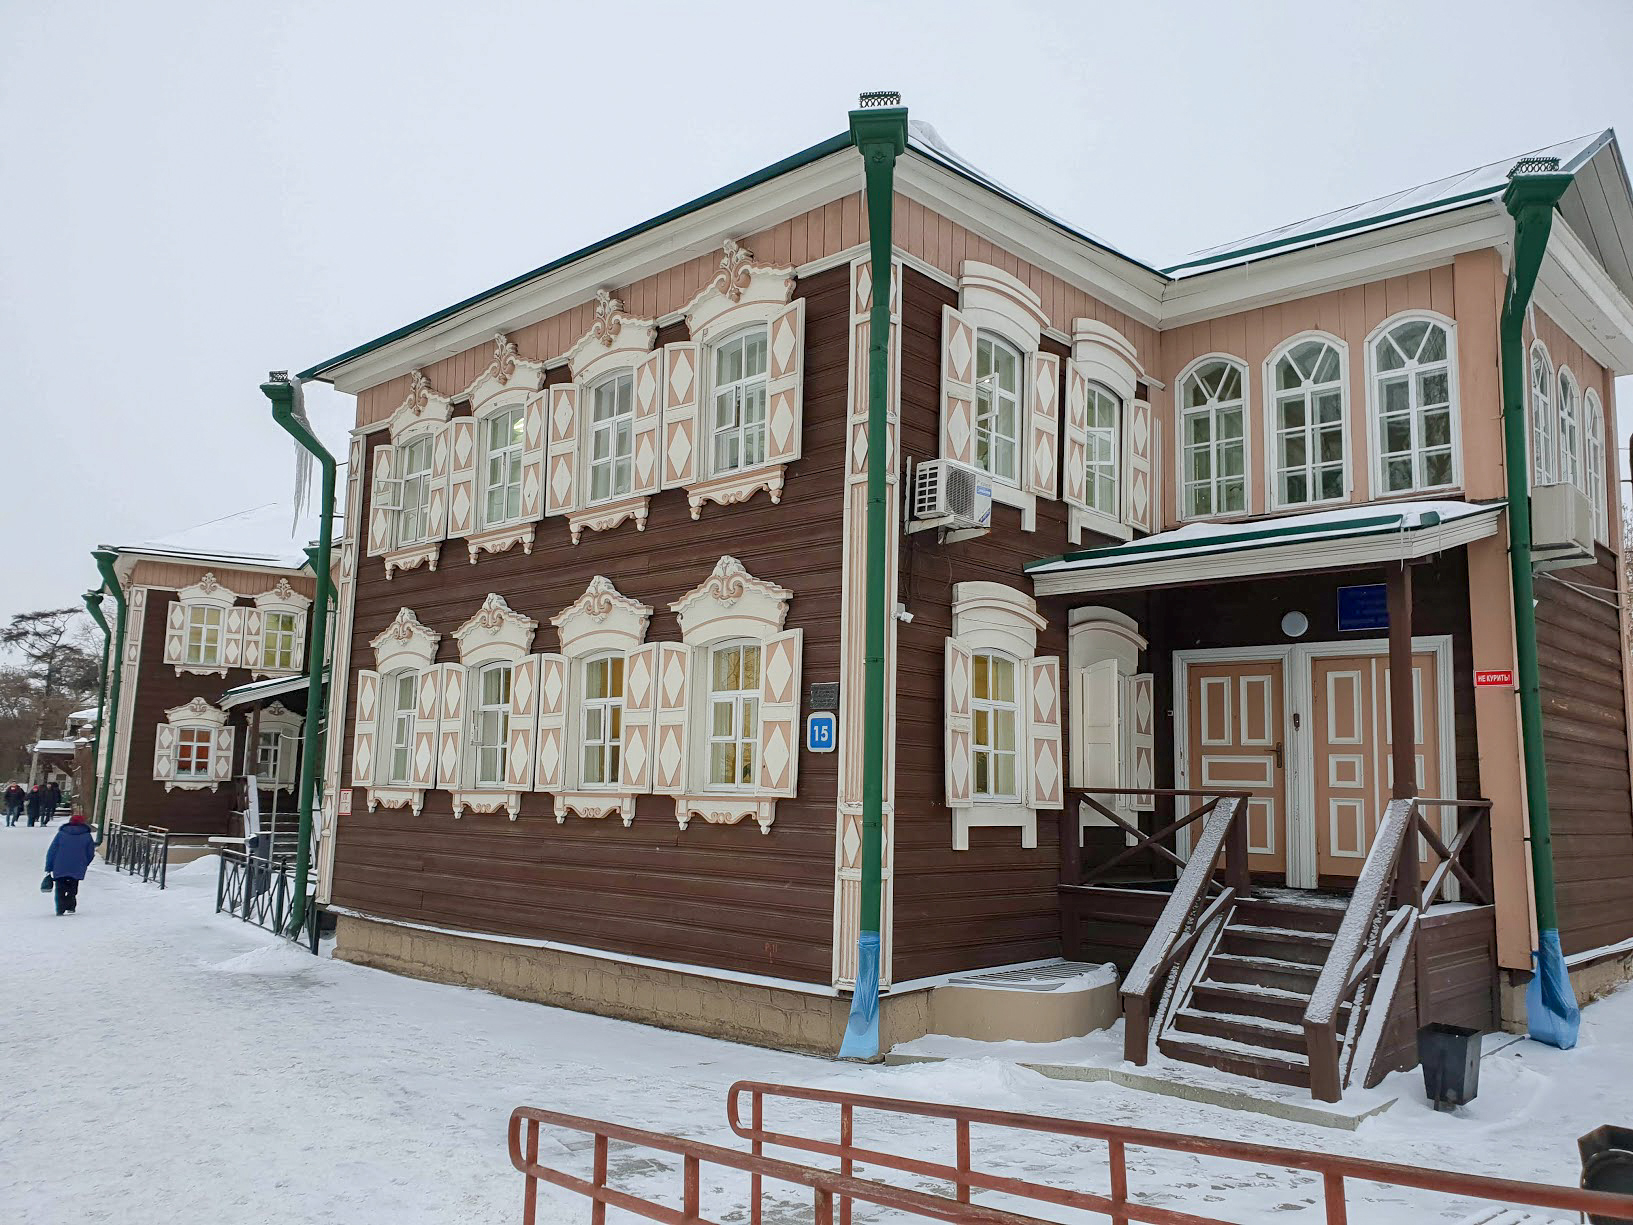 A pastel coloured wooden building in Irkutsk, Russia